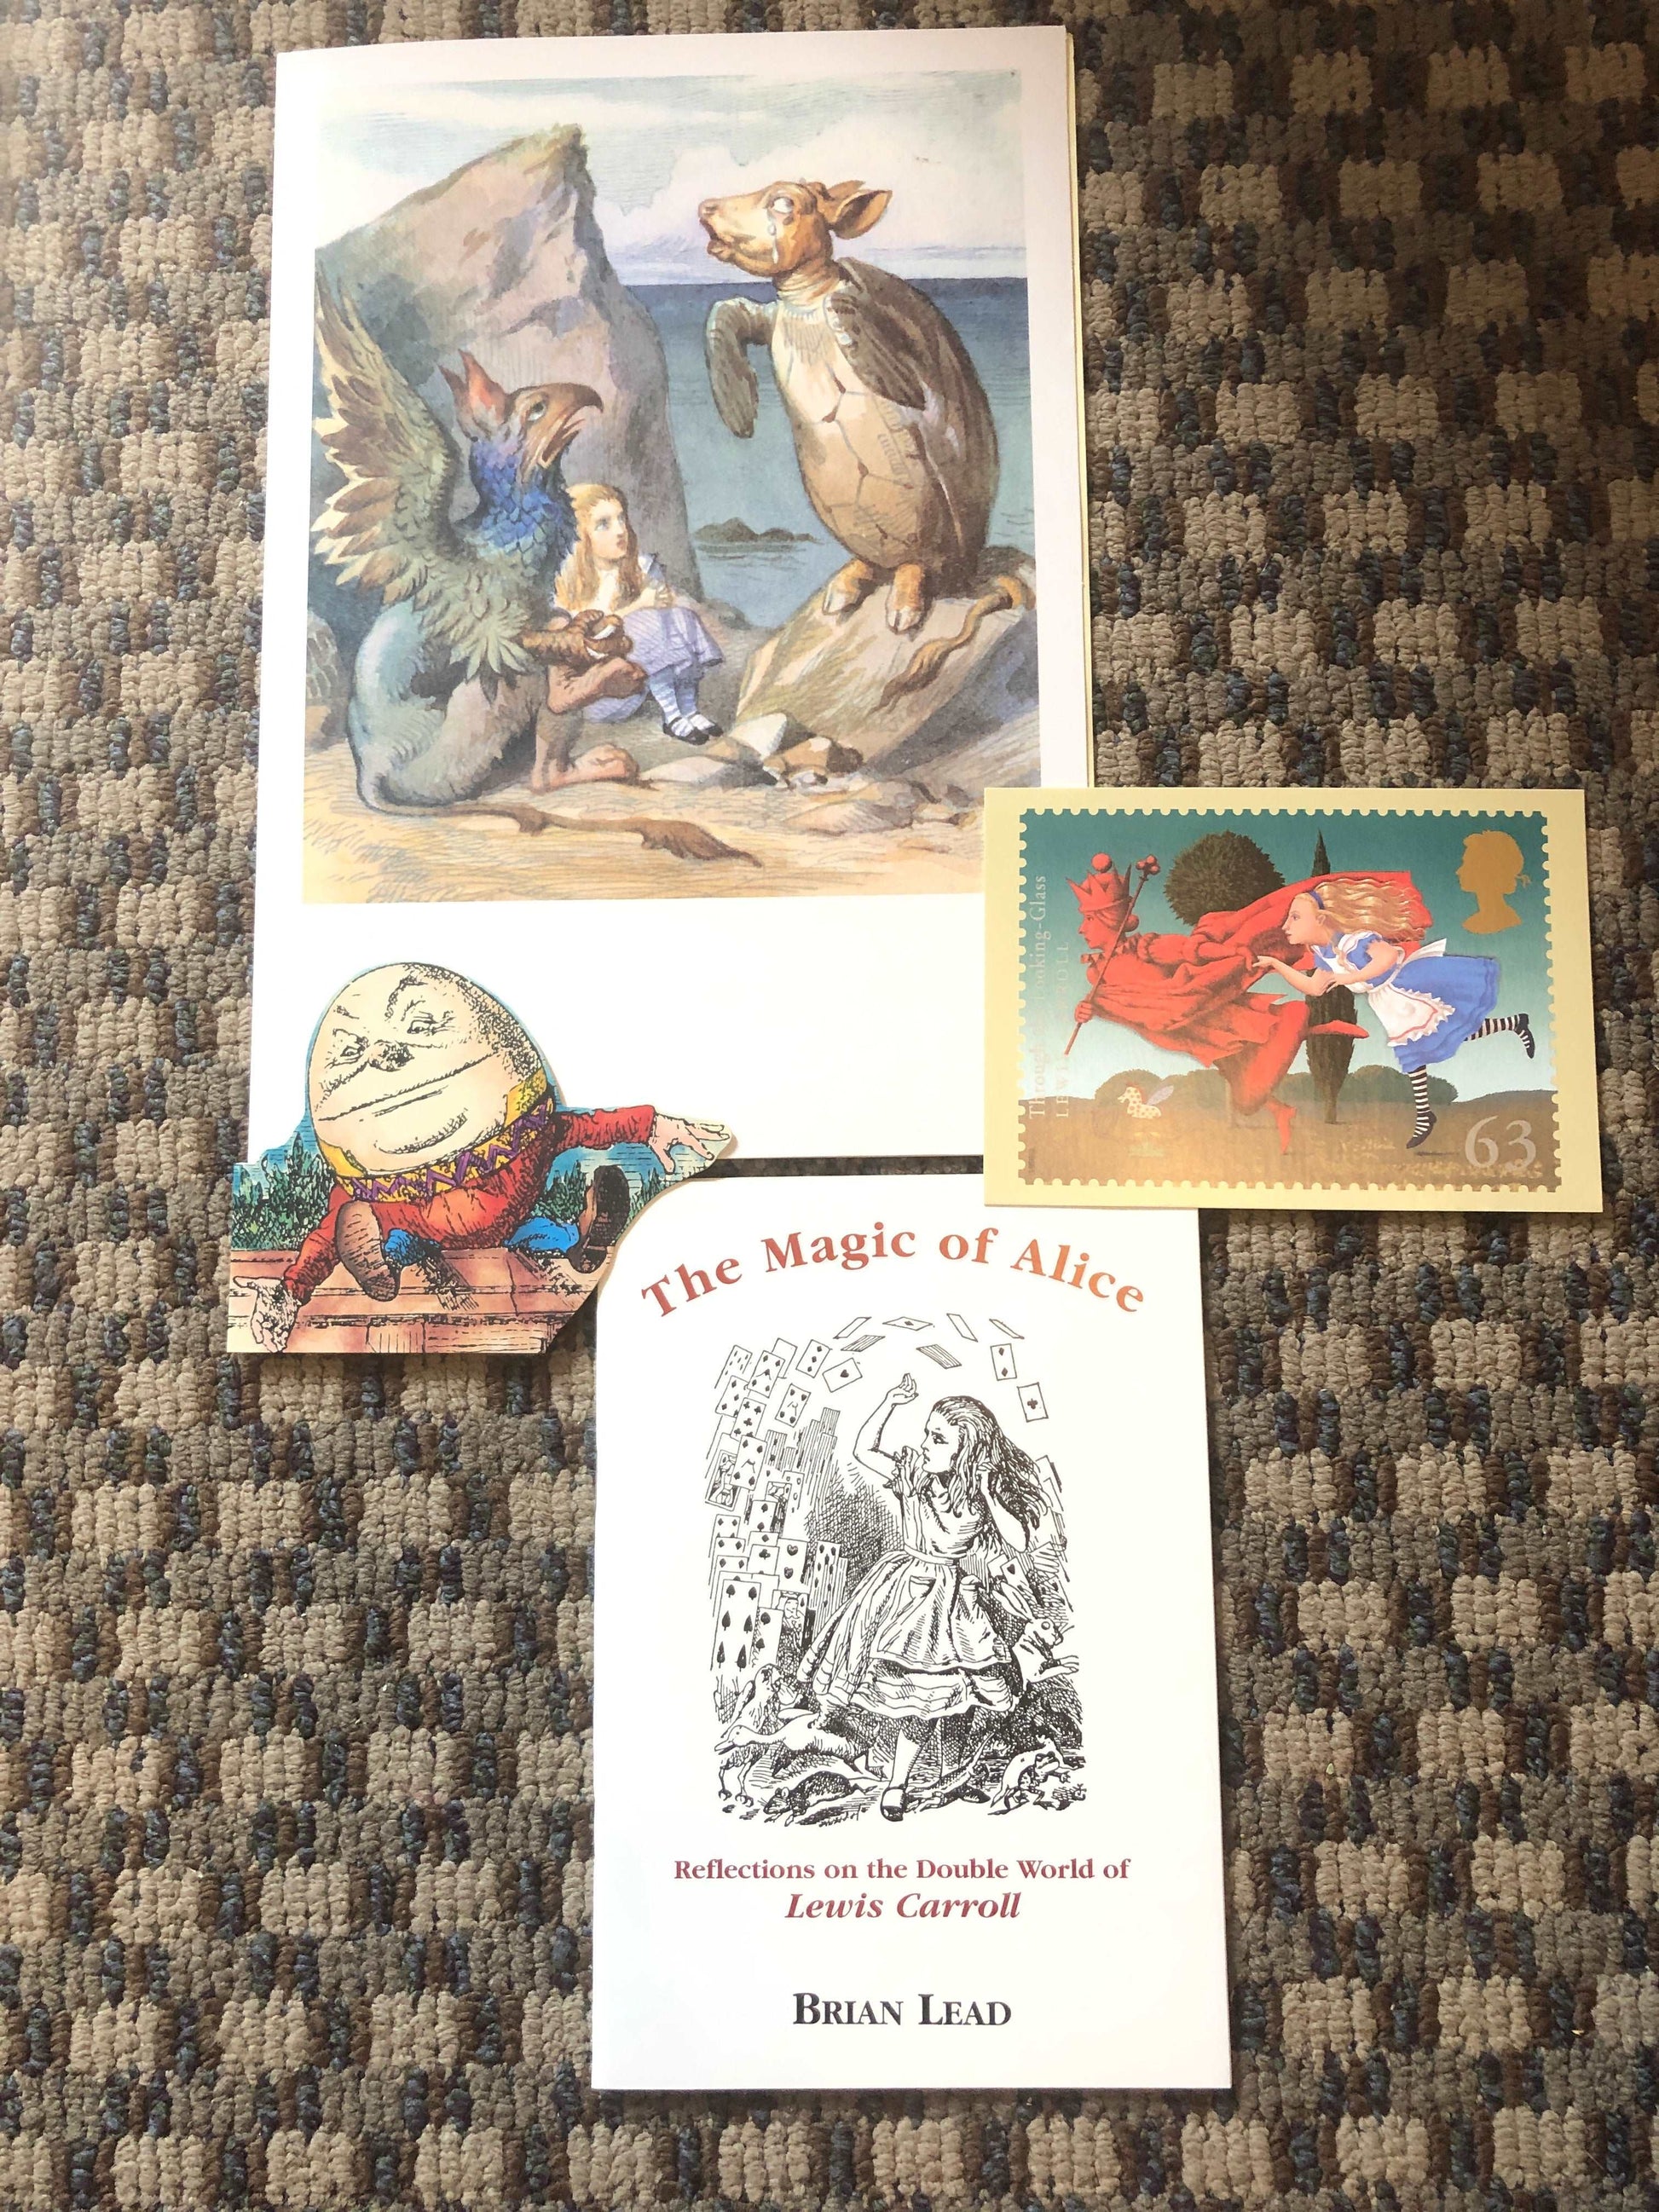 Alice in Wonderland SPECIAL PACK #7 (Mock Turtle/Humpty Dumpty)